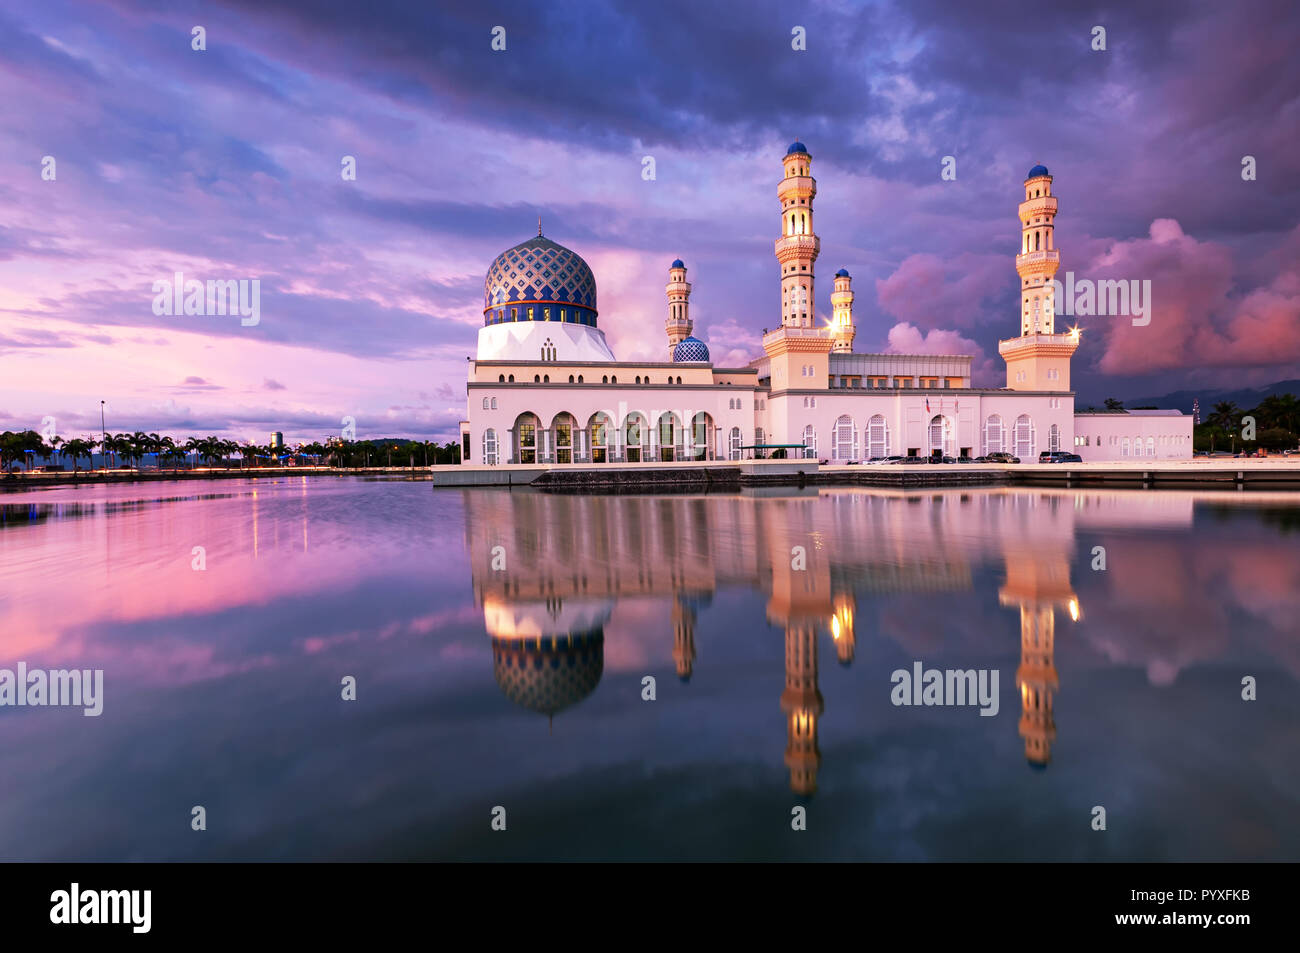 Kota Kinabalu Sabah Borneo Malaysia landmark attraction - floating mosque during sunset Stock Photo